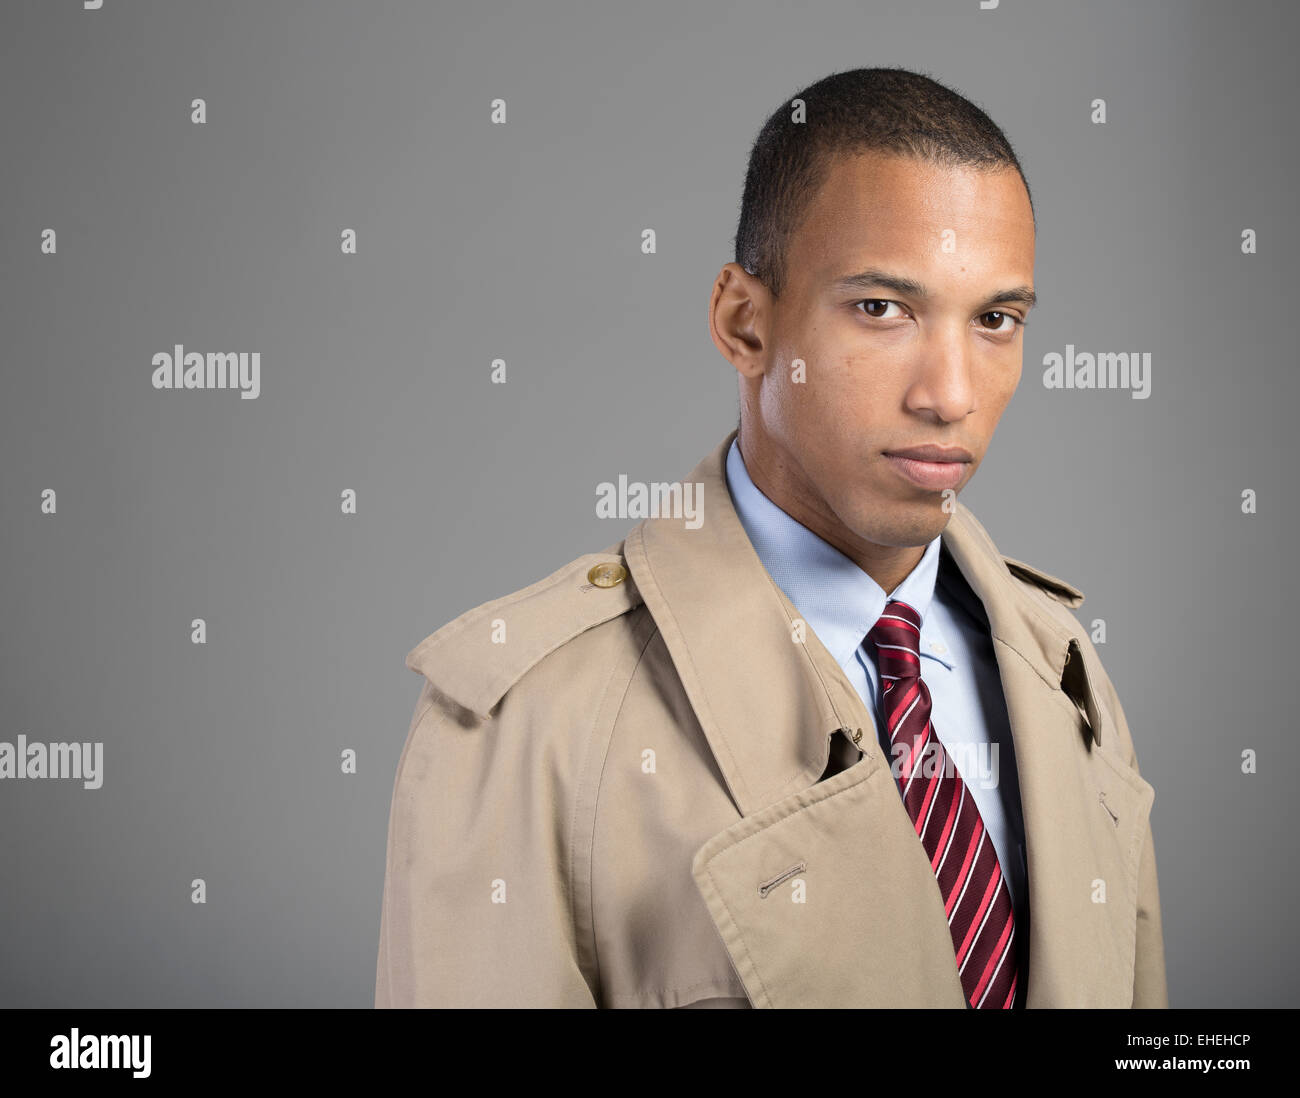 Empresario llevar traje y corbata Burberry trench coat beige Foto de stock